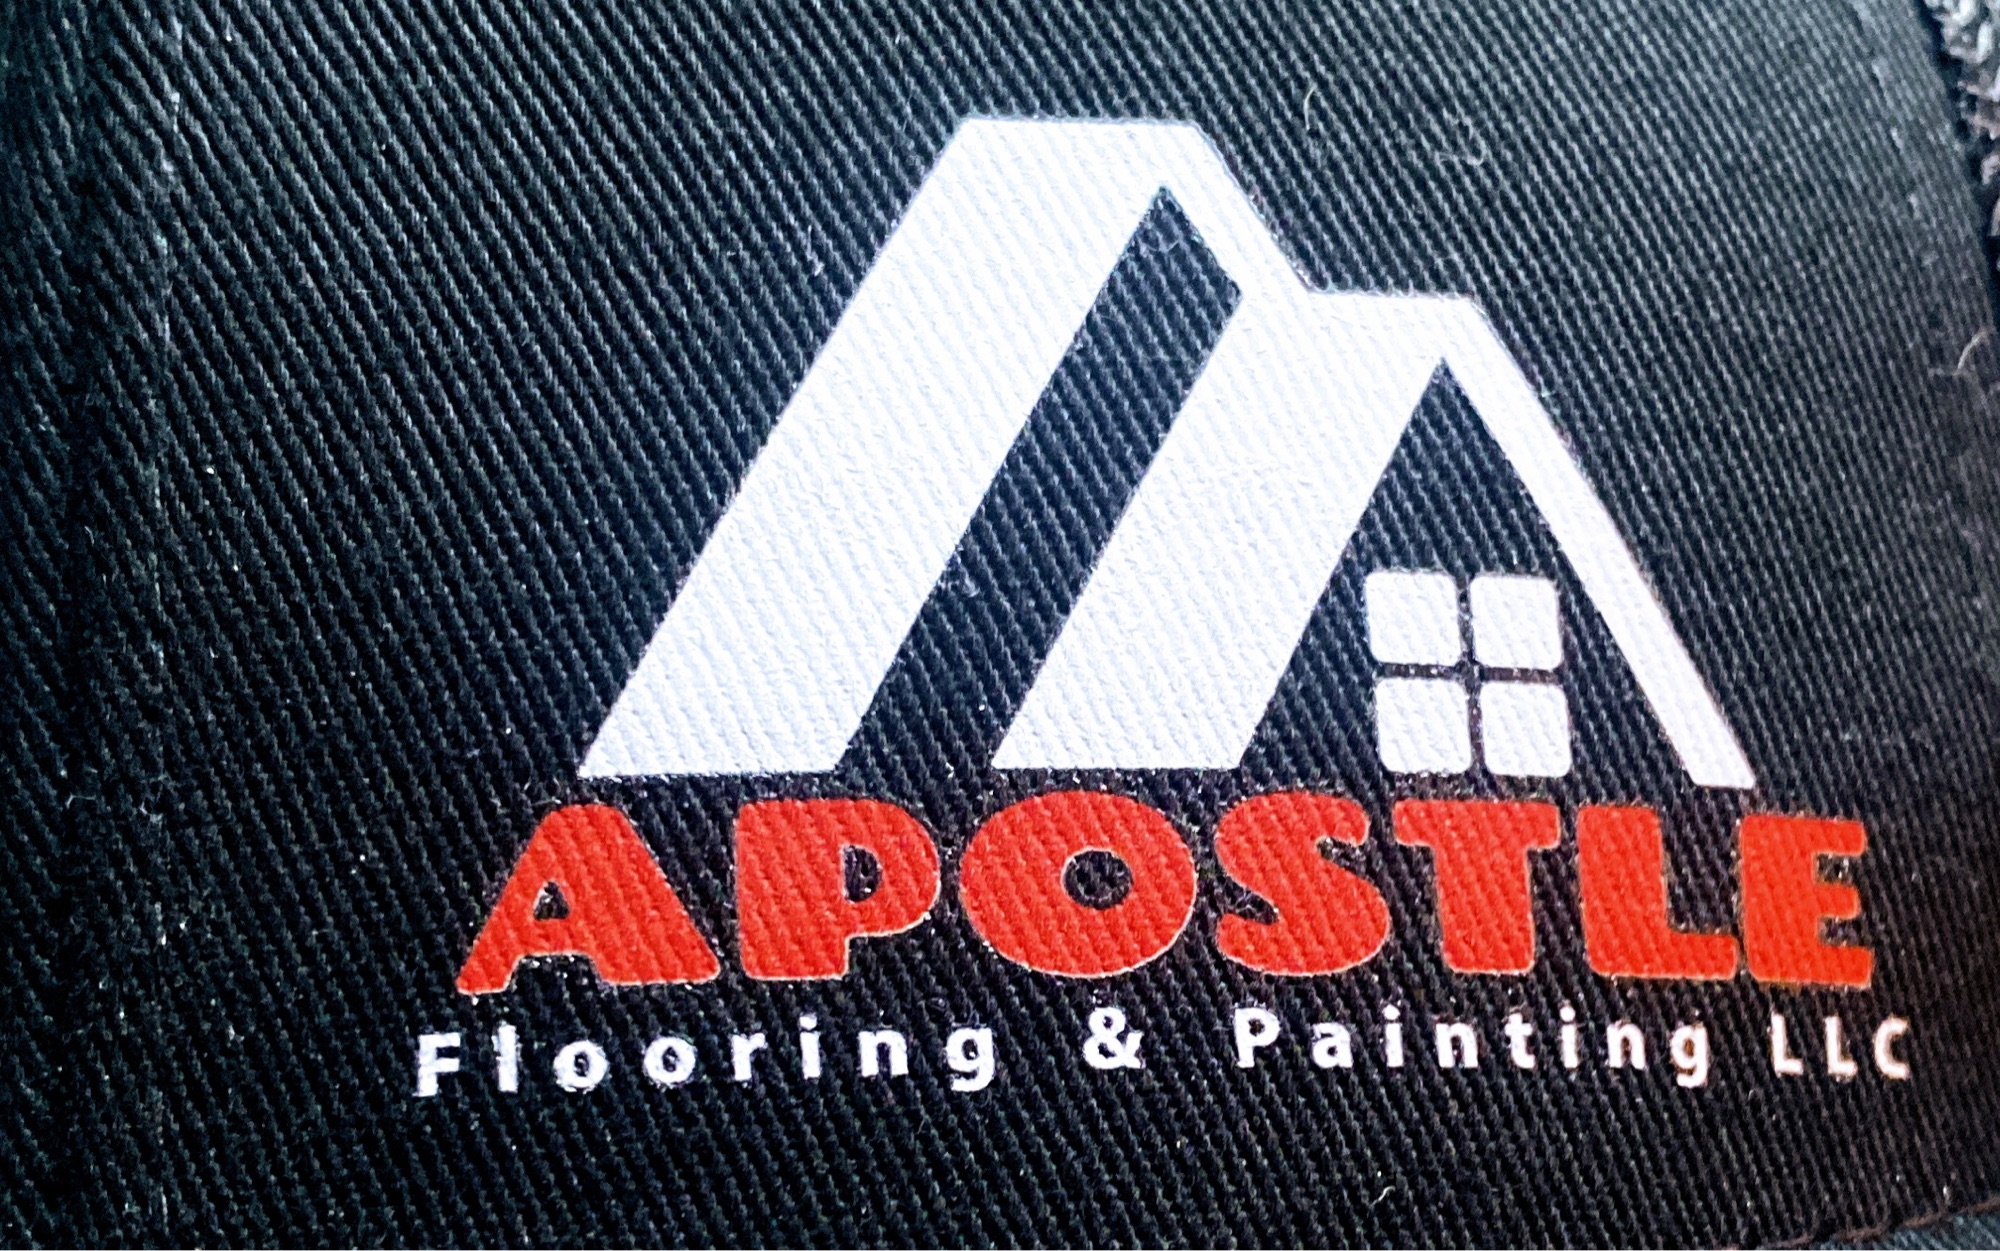 Apostle Flooring And Painting, LLC Logo